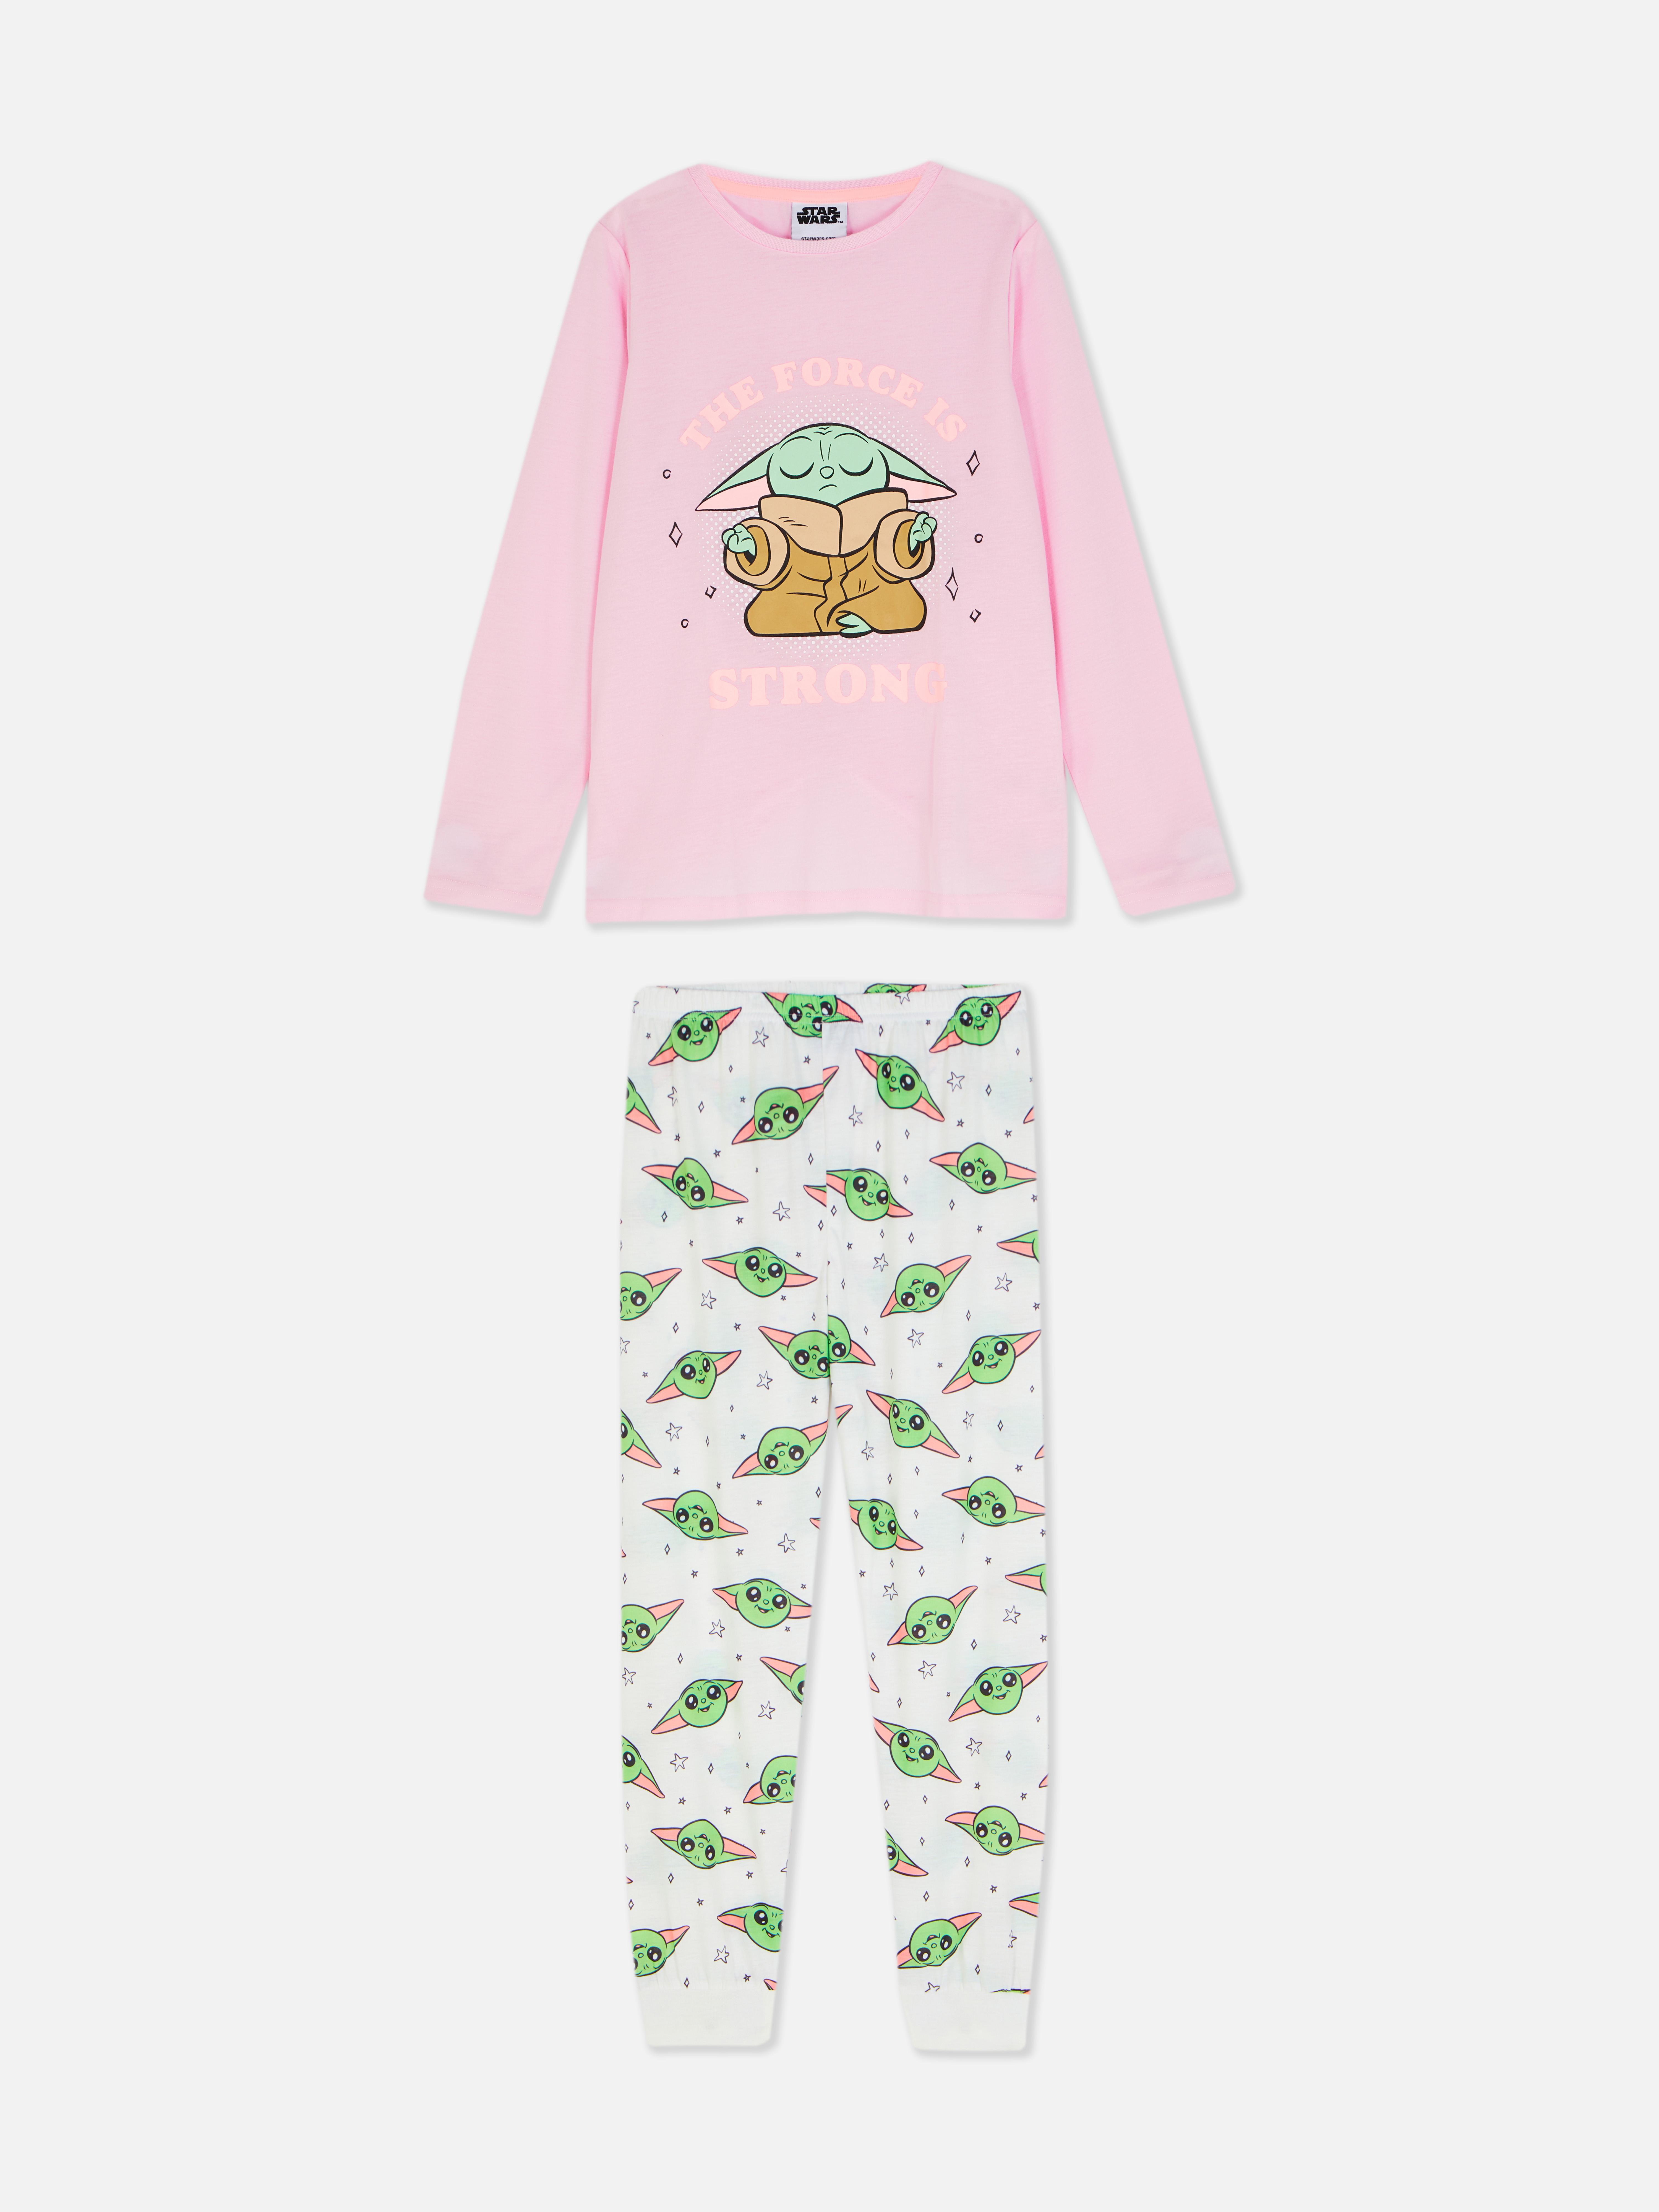 Star Wars Baby Yoda Pajama Set